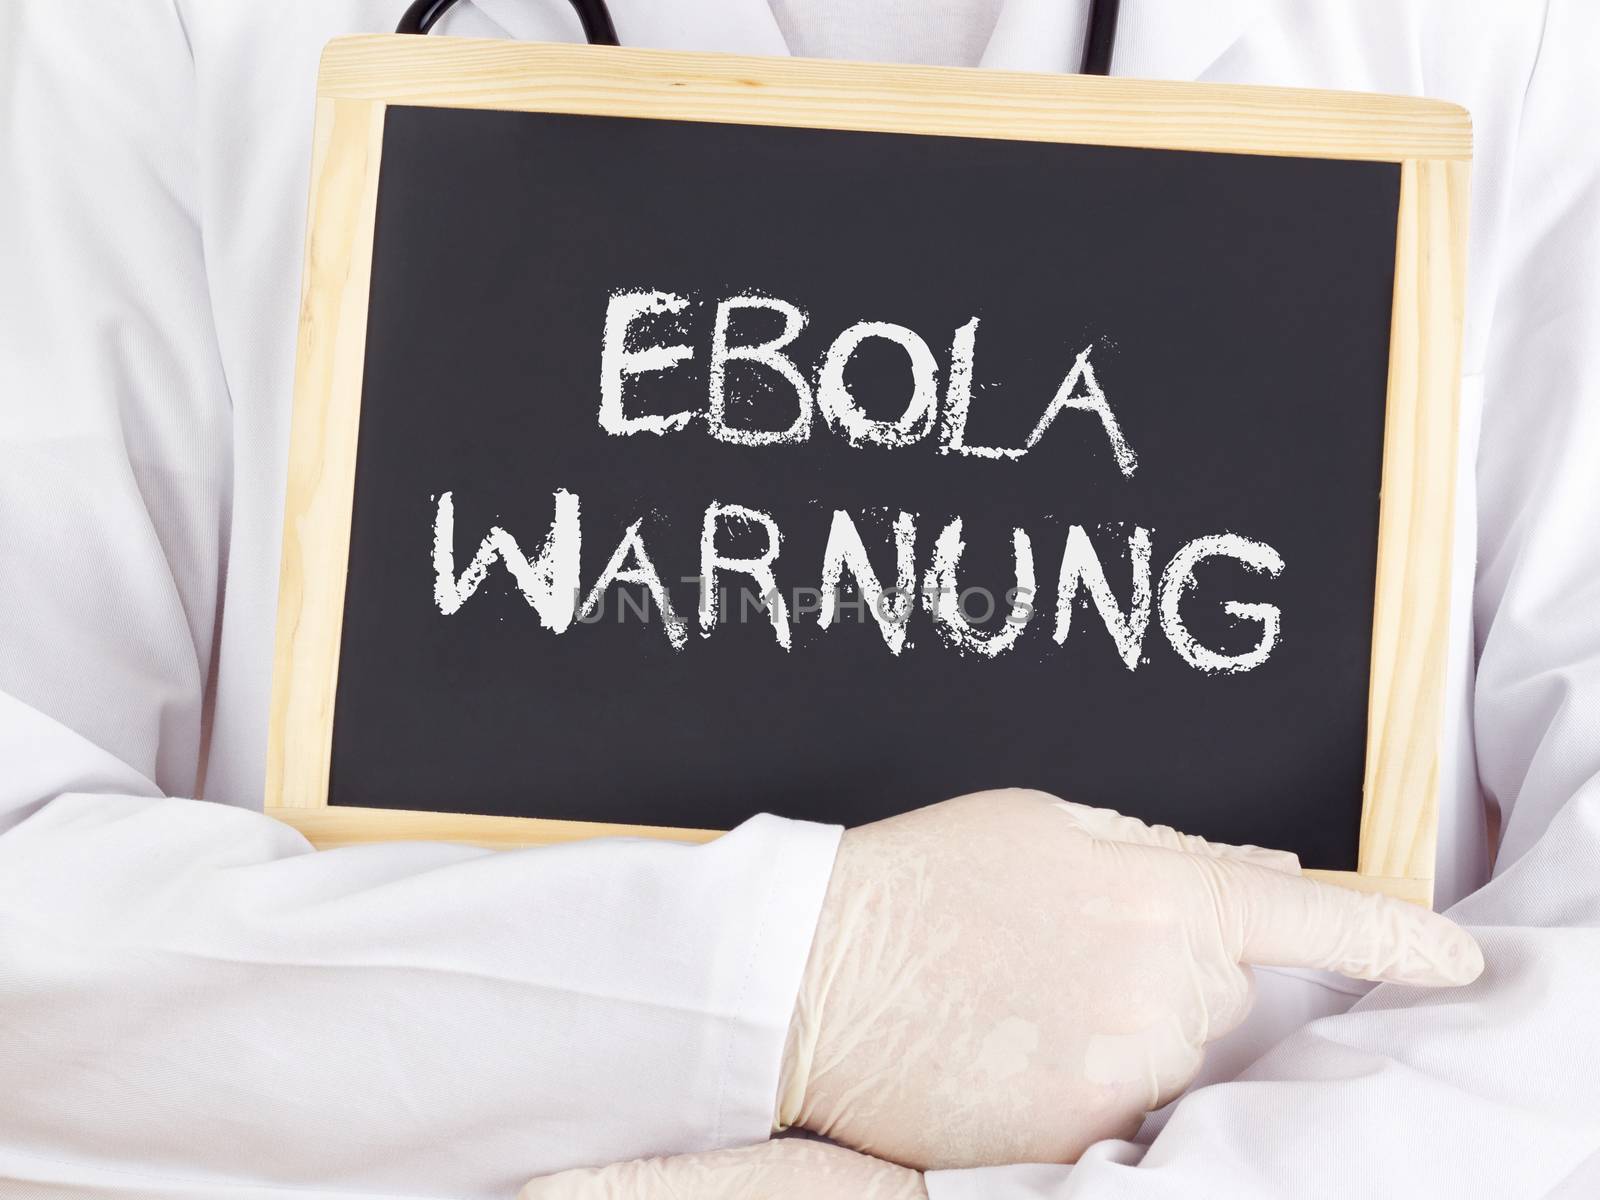 Doctor shows information: Ebola warning in german